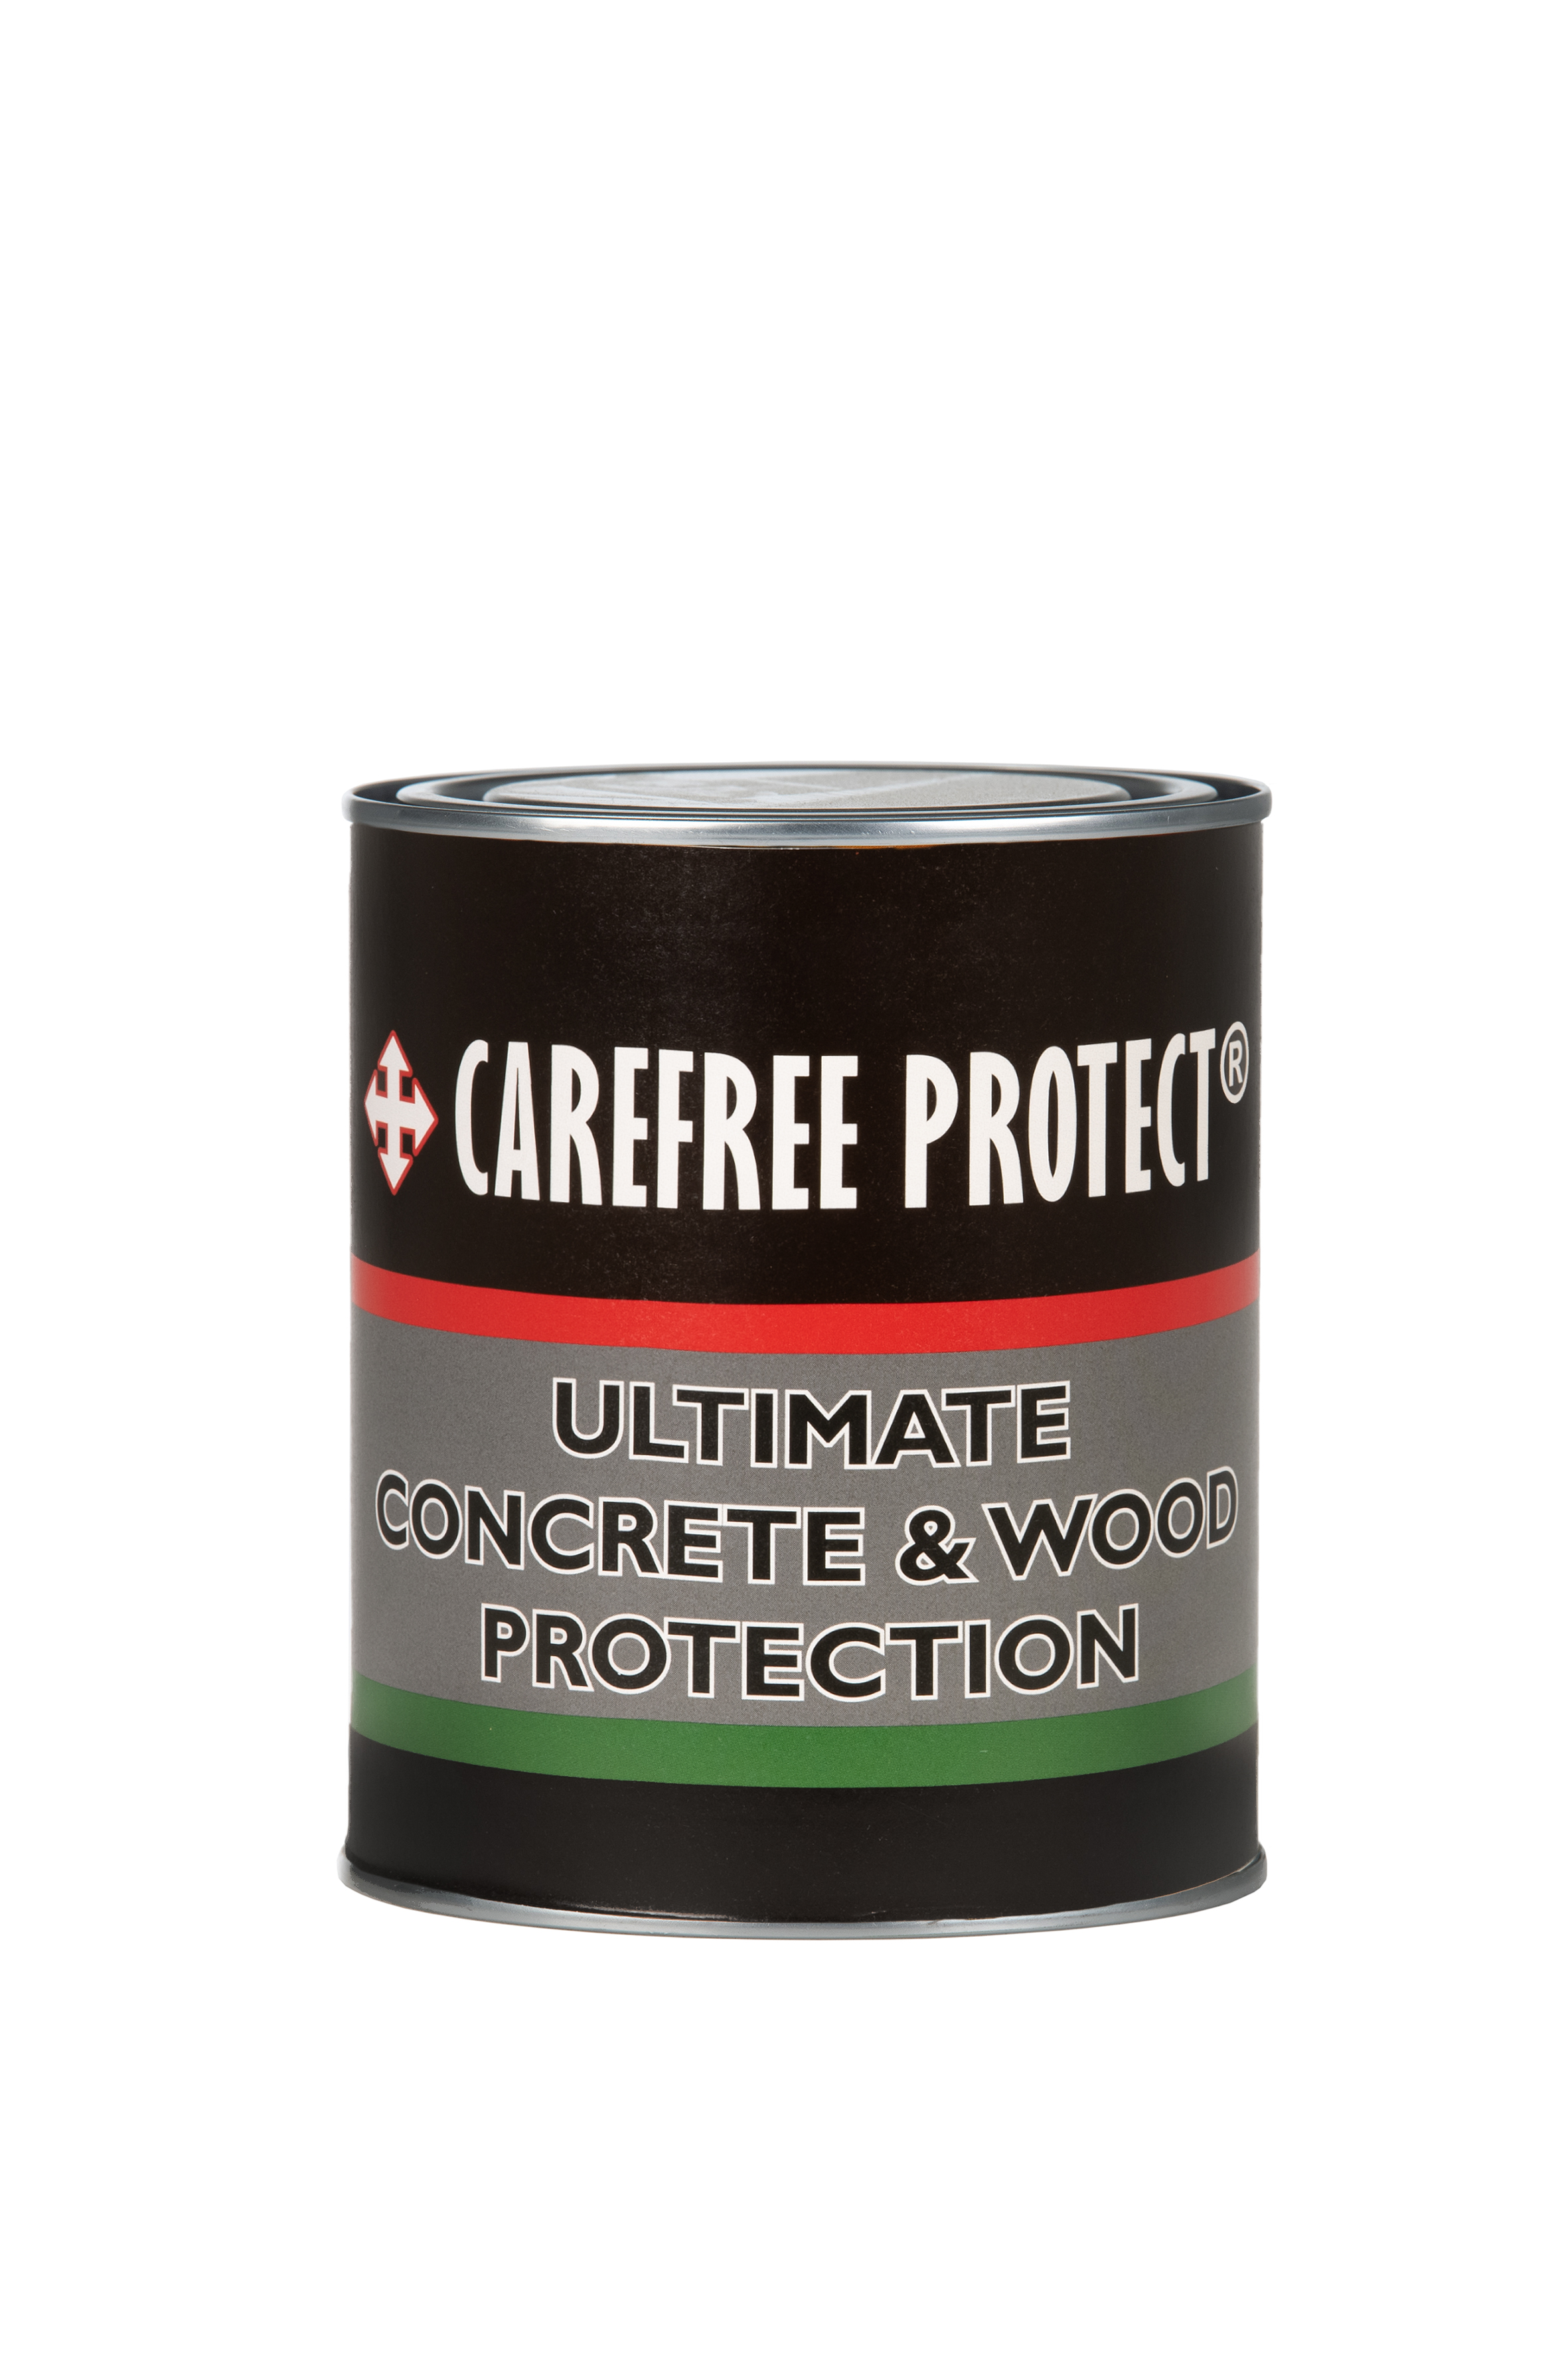 Carefree Protect Gerüstbauholzlasur weiß 0.75ltr